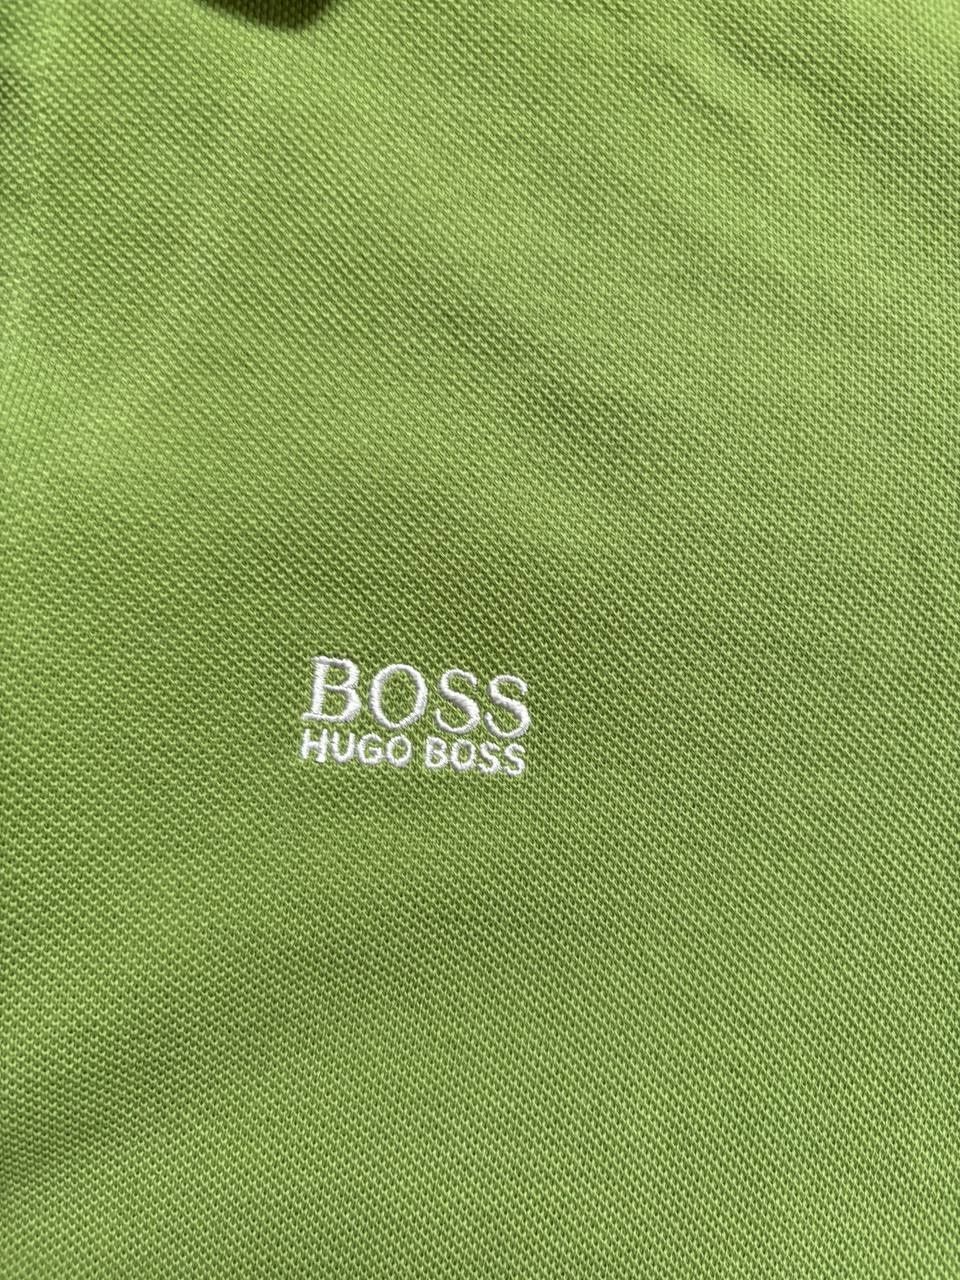 Футболка поло Hugo Boss зелёная салатовая мужская S-M